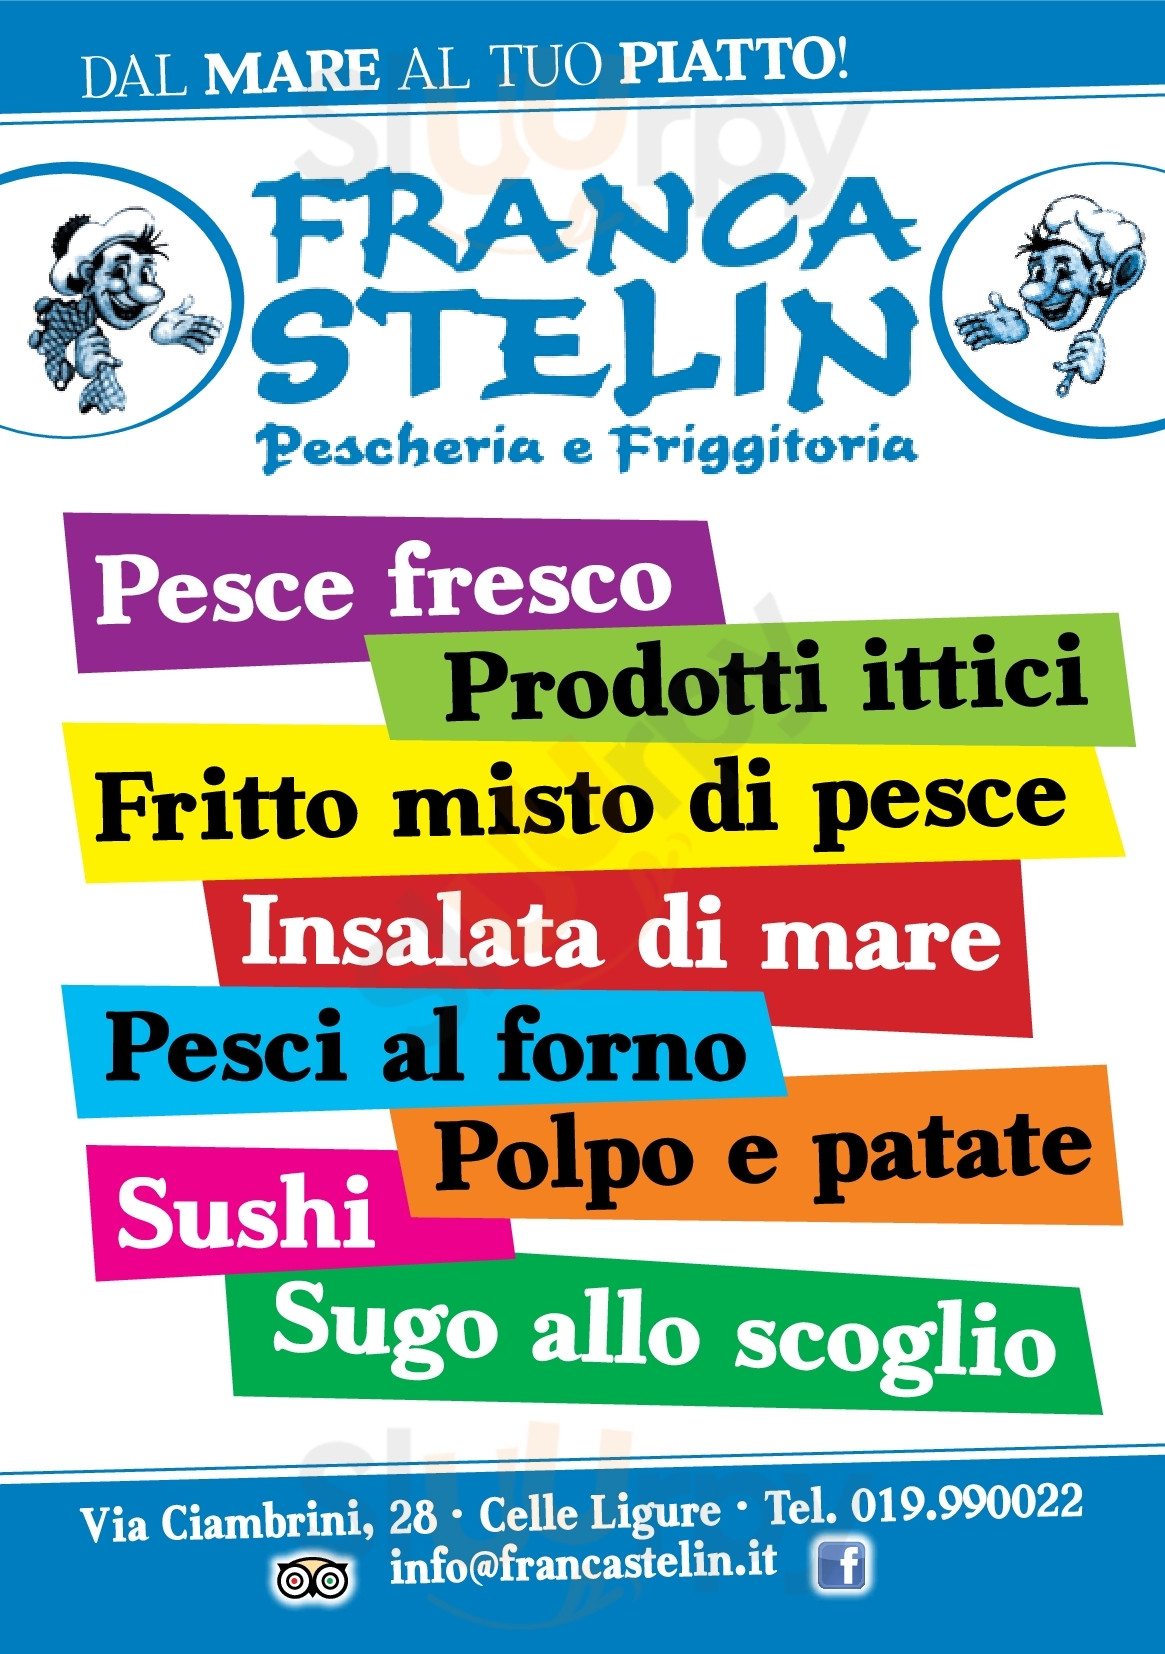 Pescheria Friggitoria Franca Stelin Celle Ligure menù 1 pagina